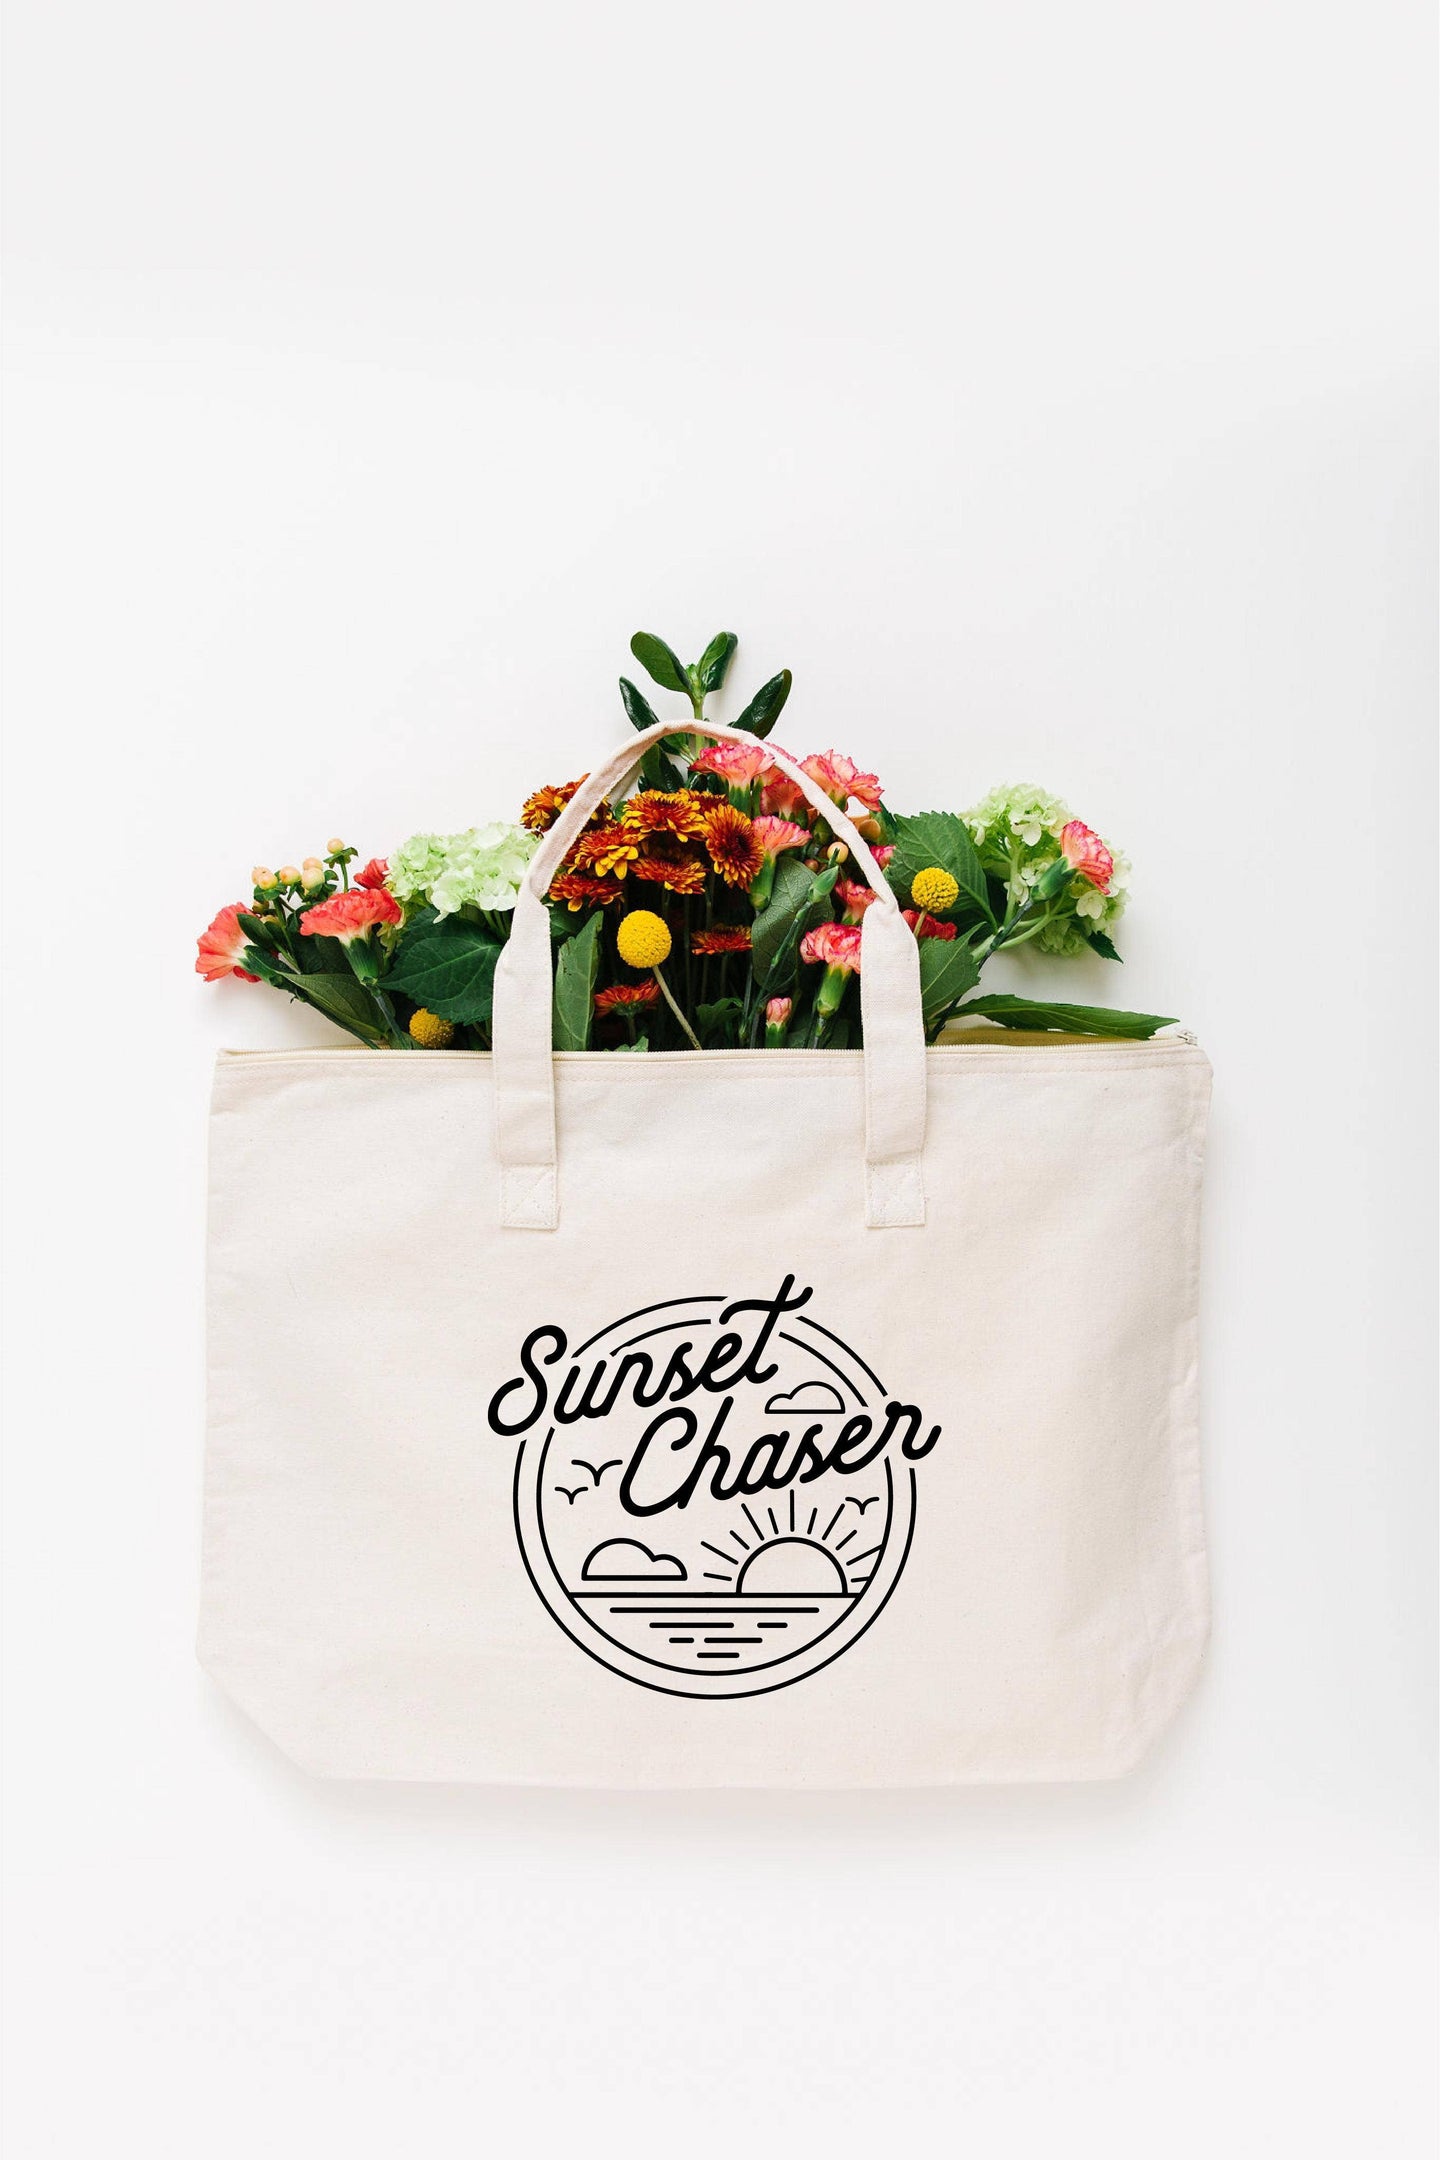 Sunset Chaser Tote Bag - Large